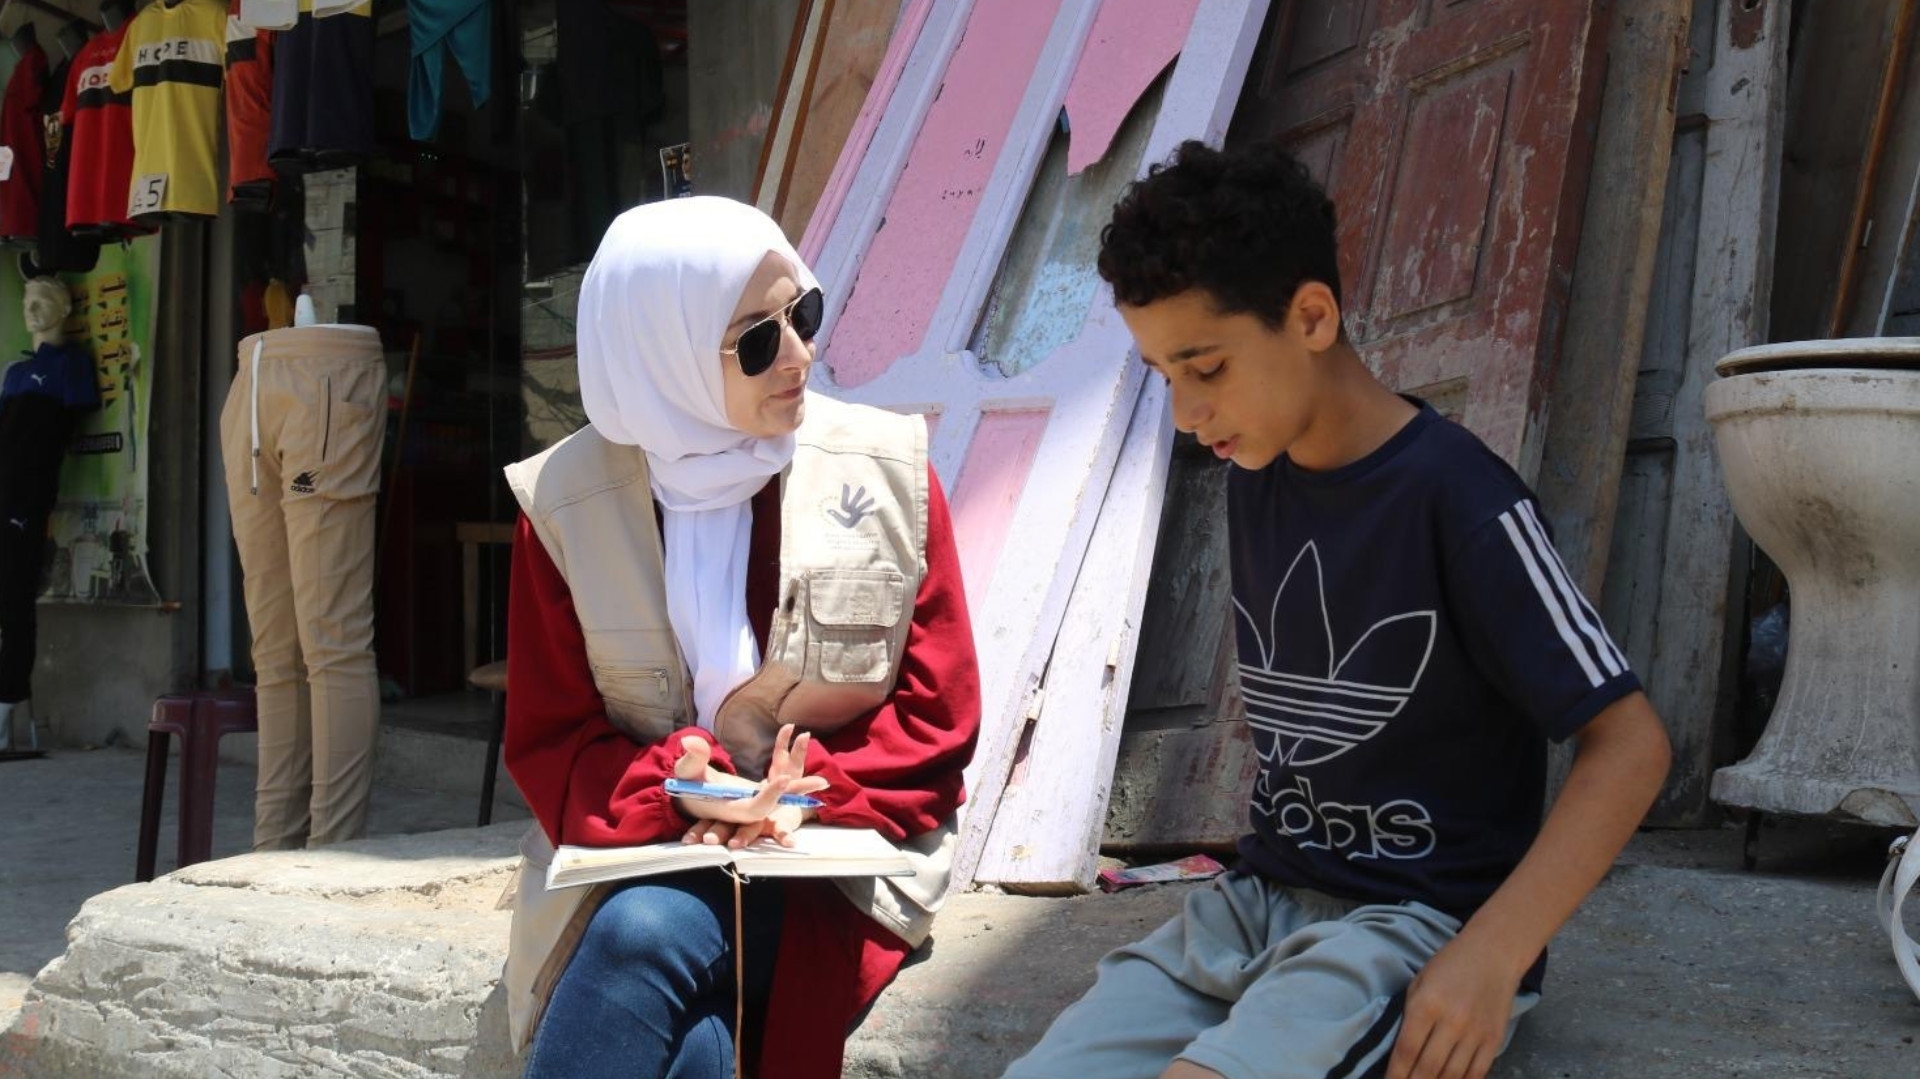 Maha Hussaini (L) interviewing a Palestinian boy in the Gaza Strip in June 2023 (Supplied/Mahmoud Mushtaha)